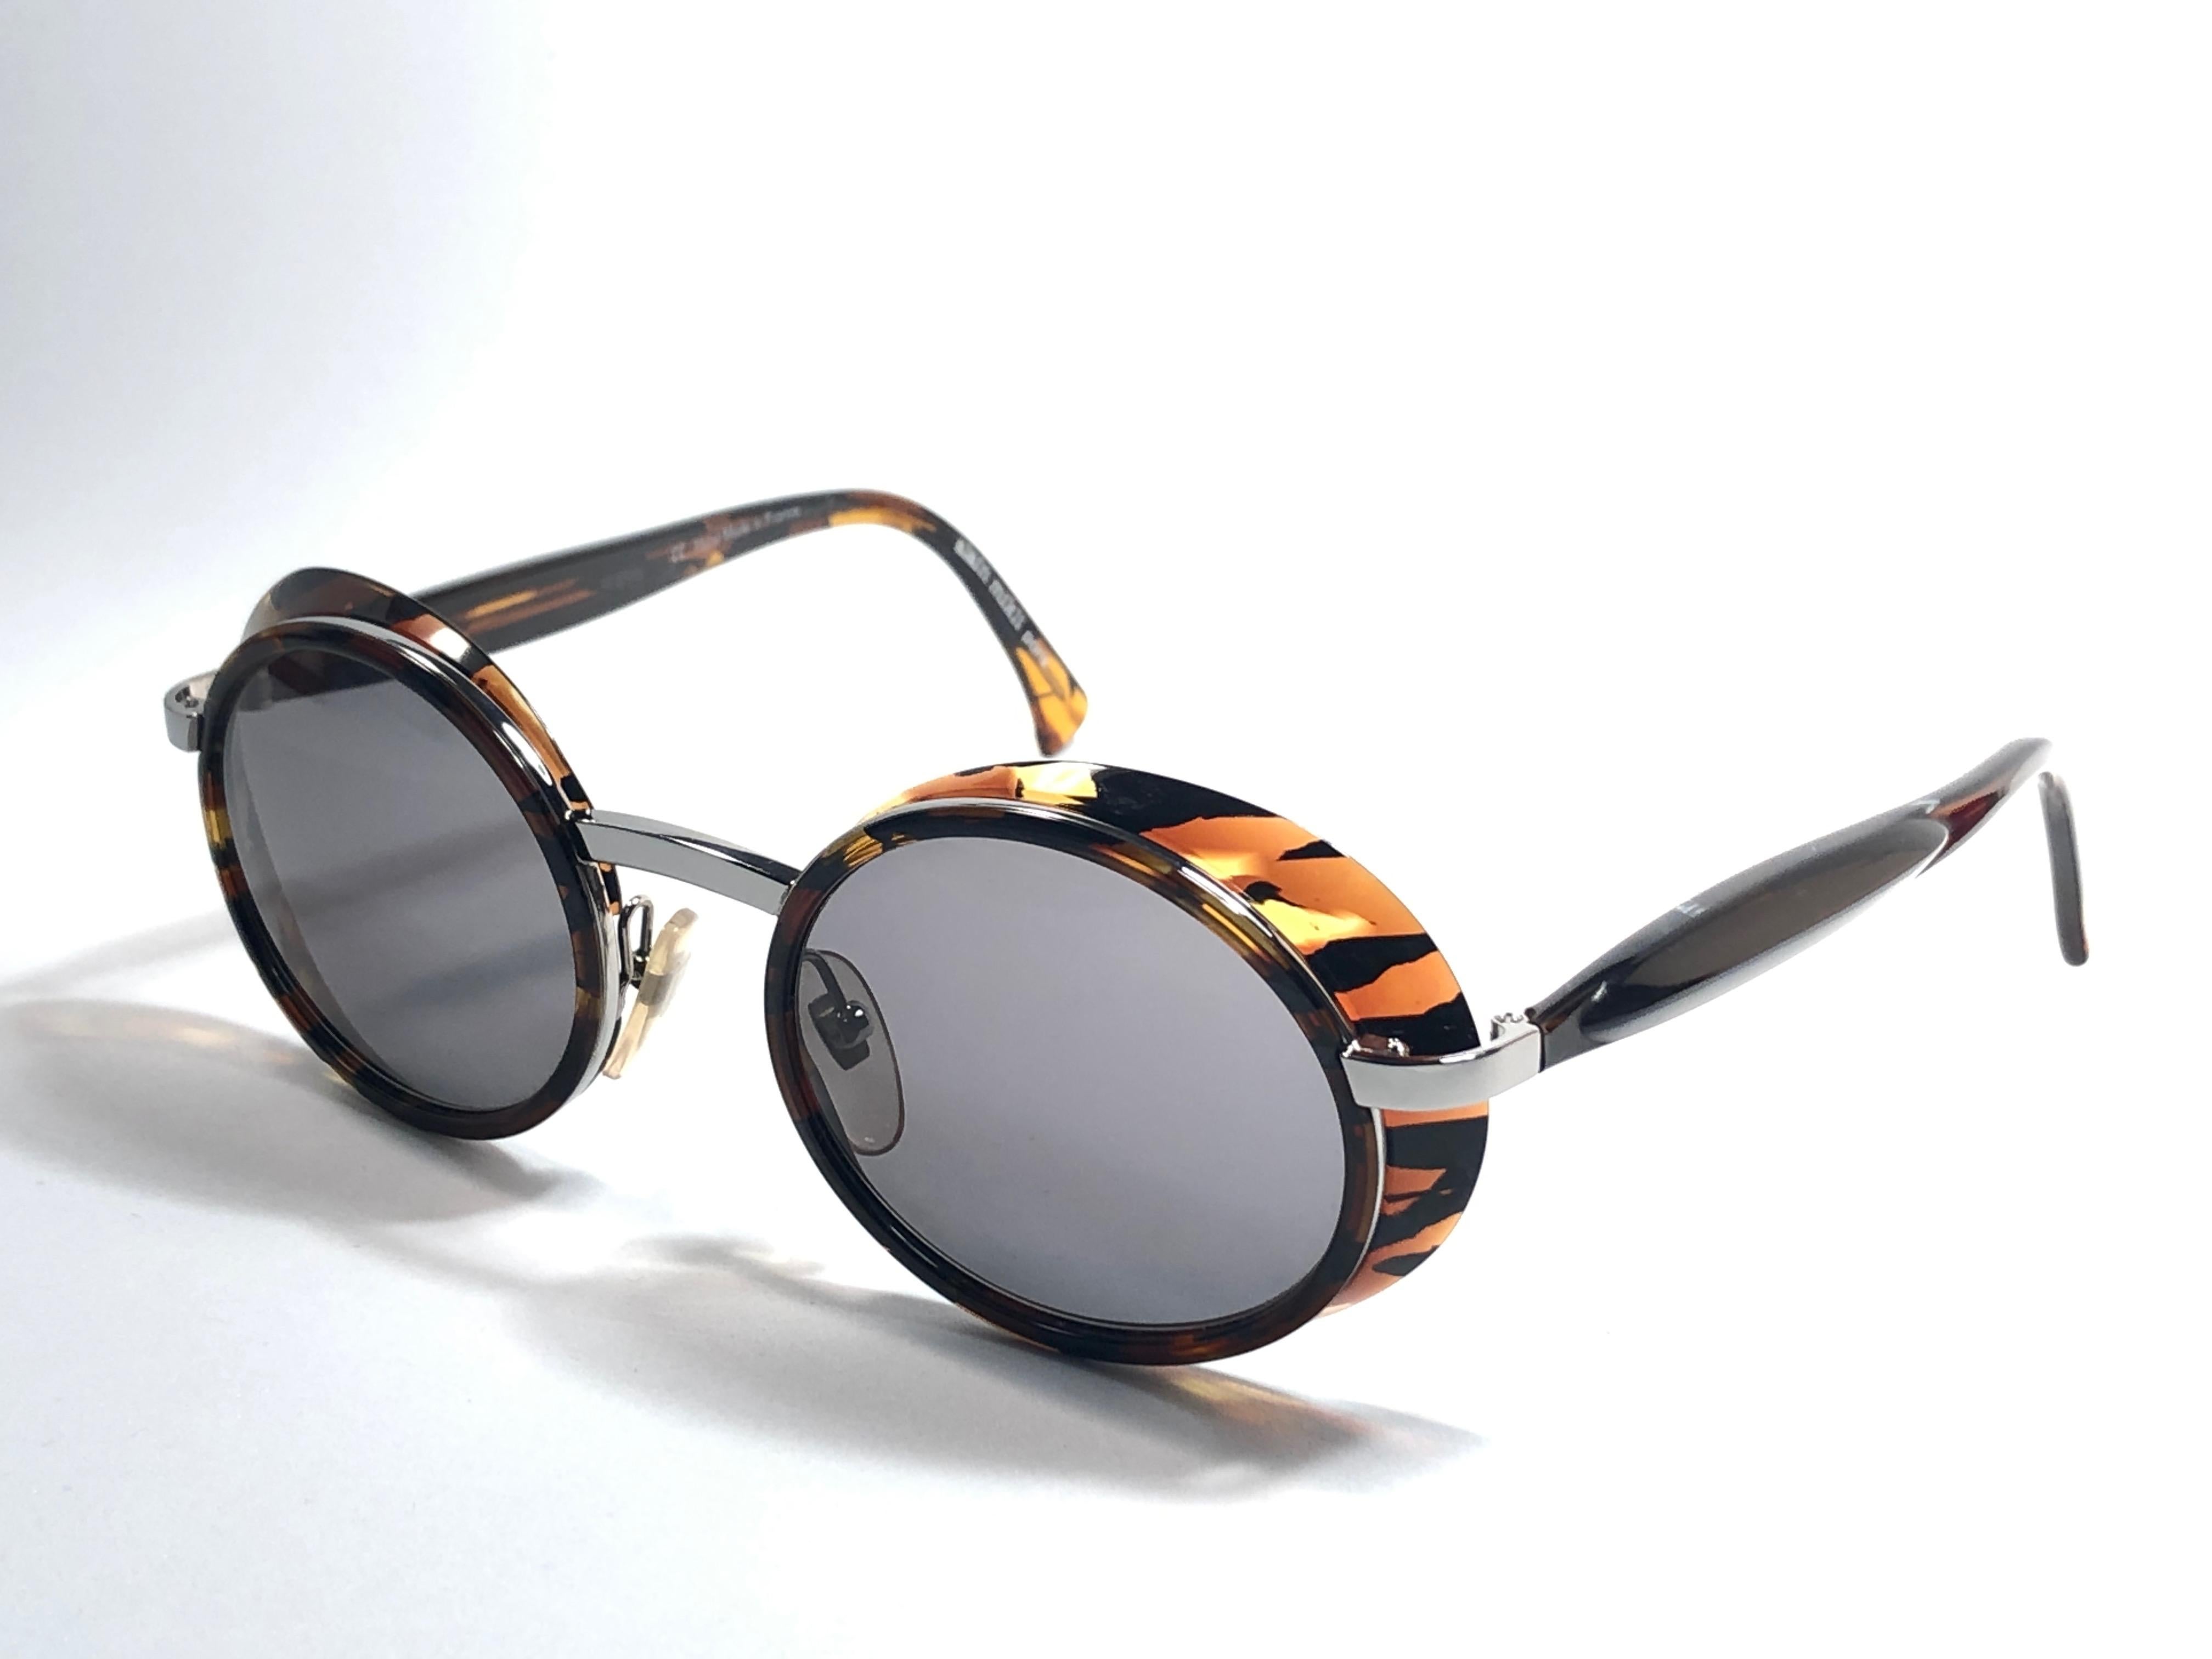 New Vintage Rare Alain Mikli 3124 Tortoise & Black France Sunglasses 1990 For Sale 6